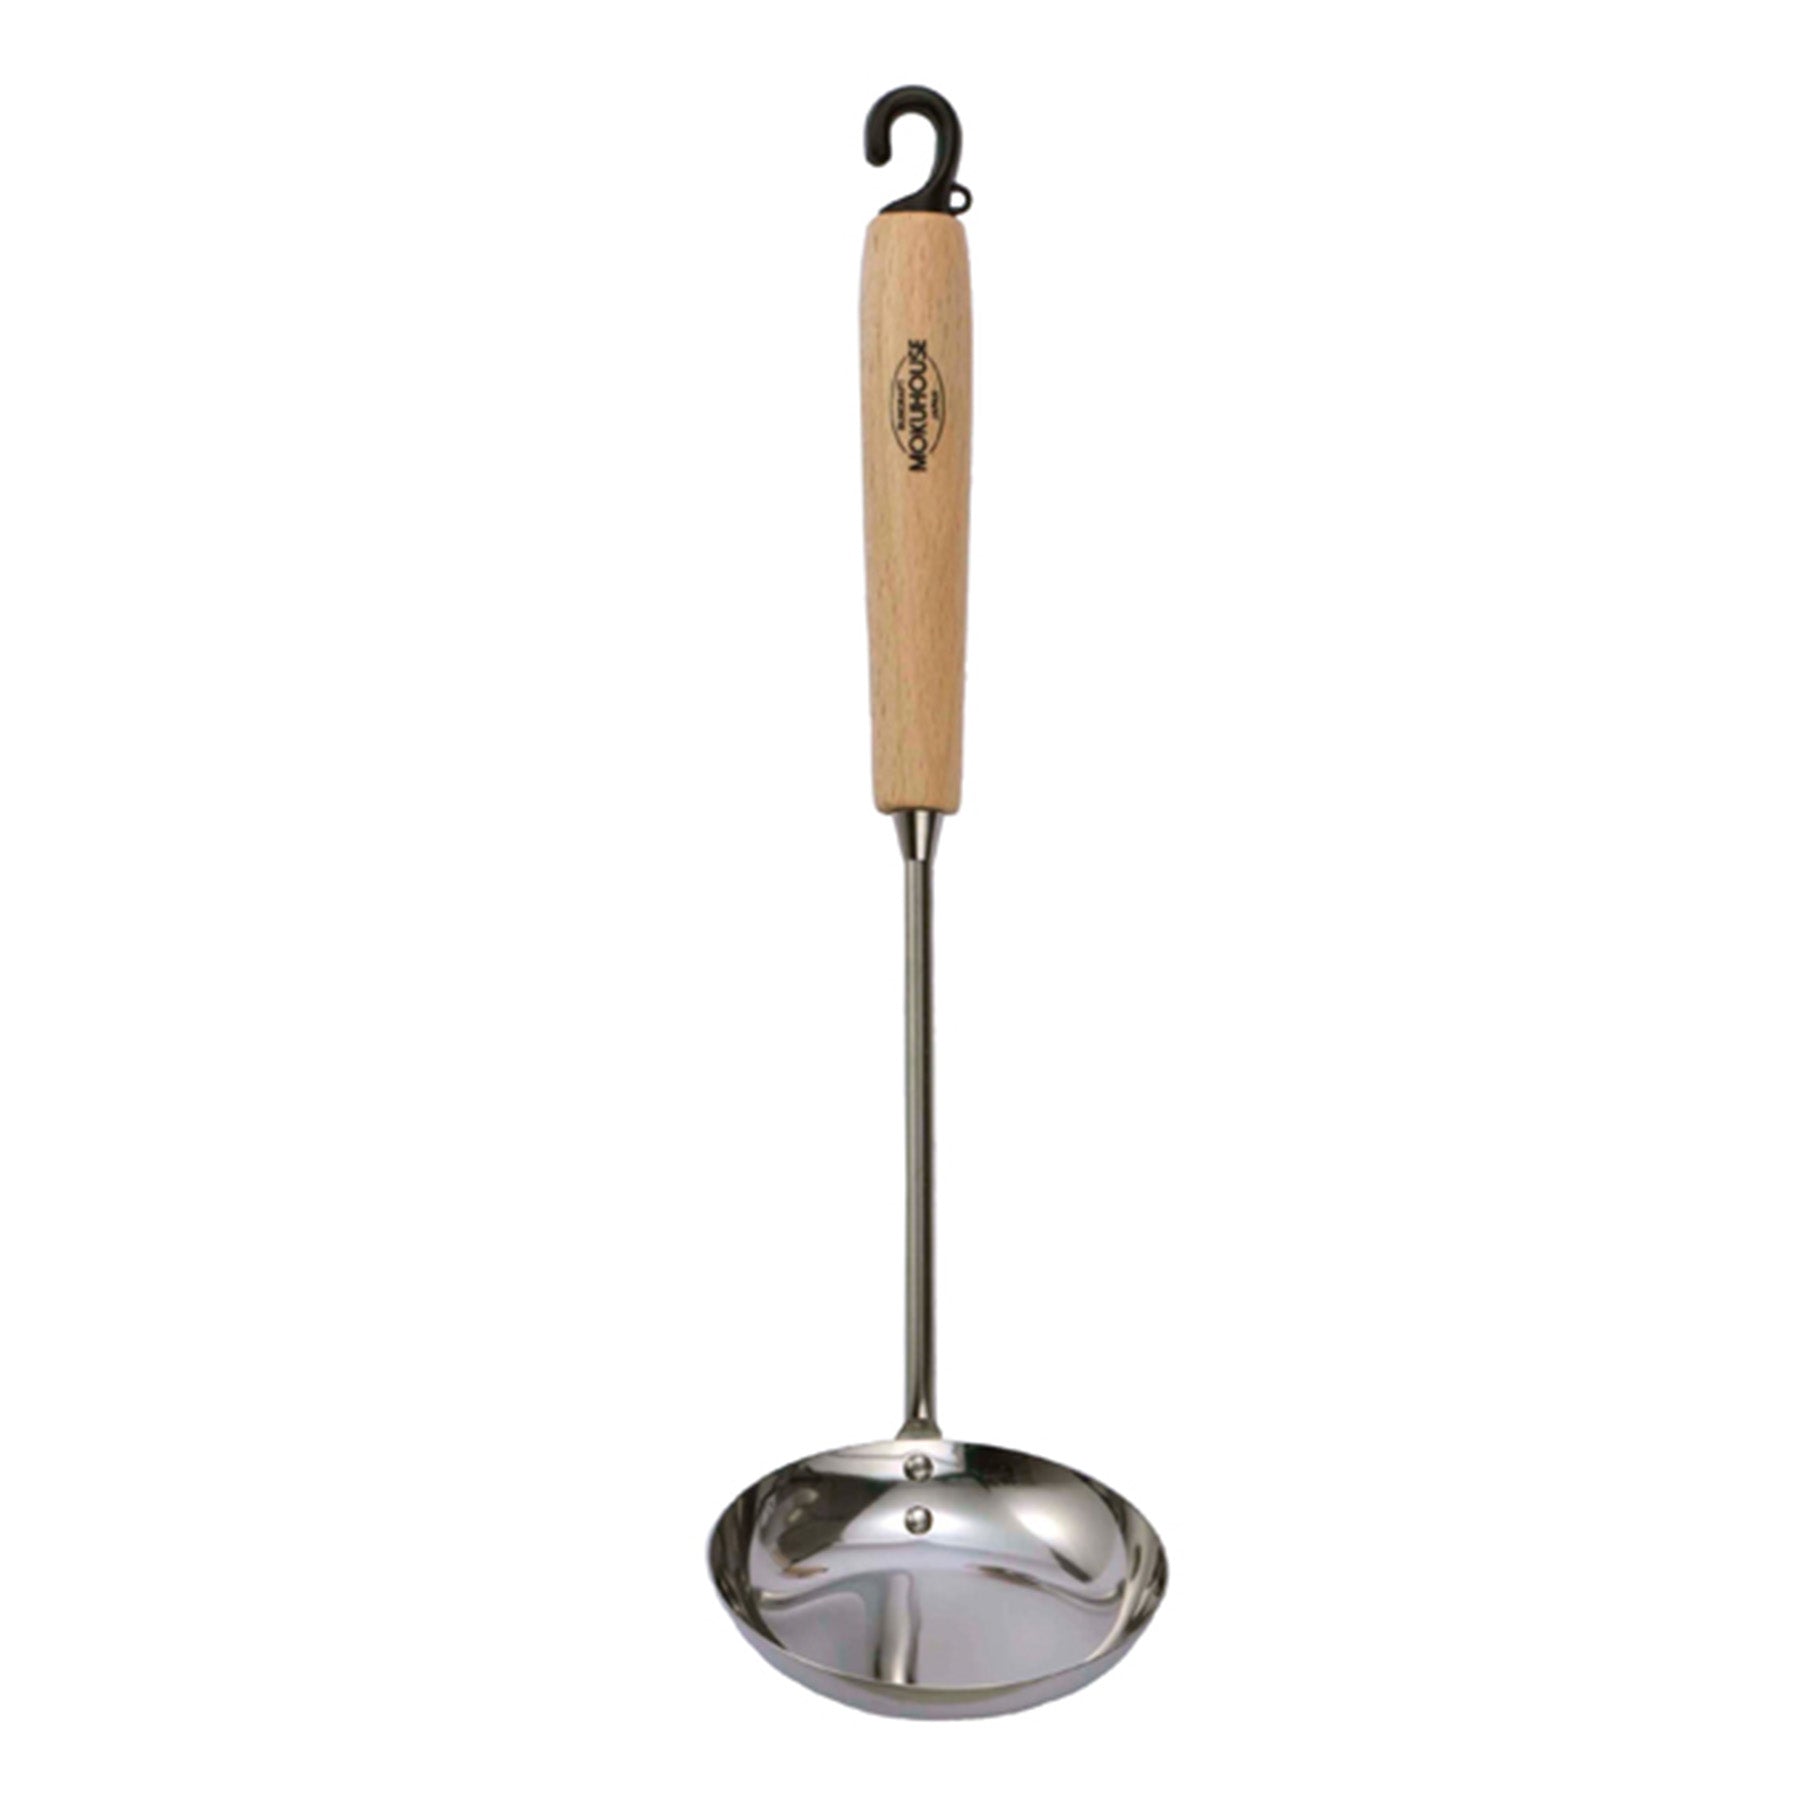 Soup ladle with handle, Silver Size: 24 cm.